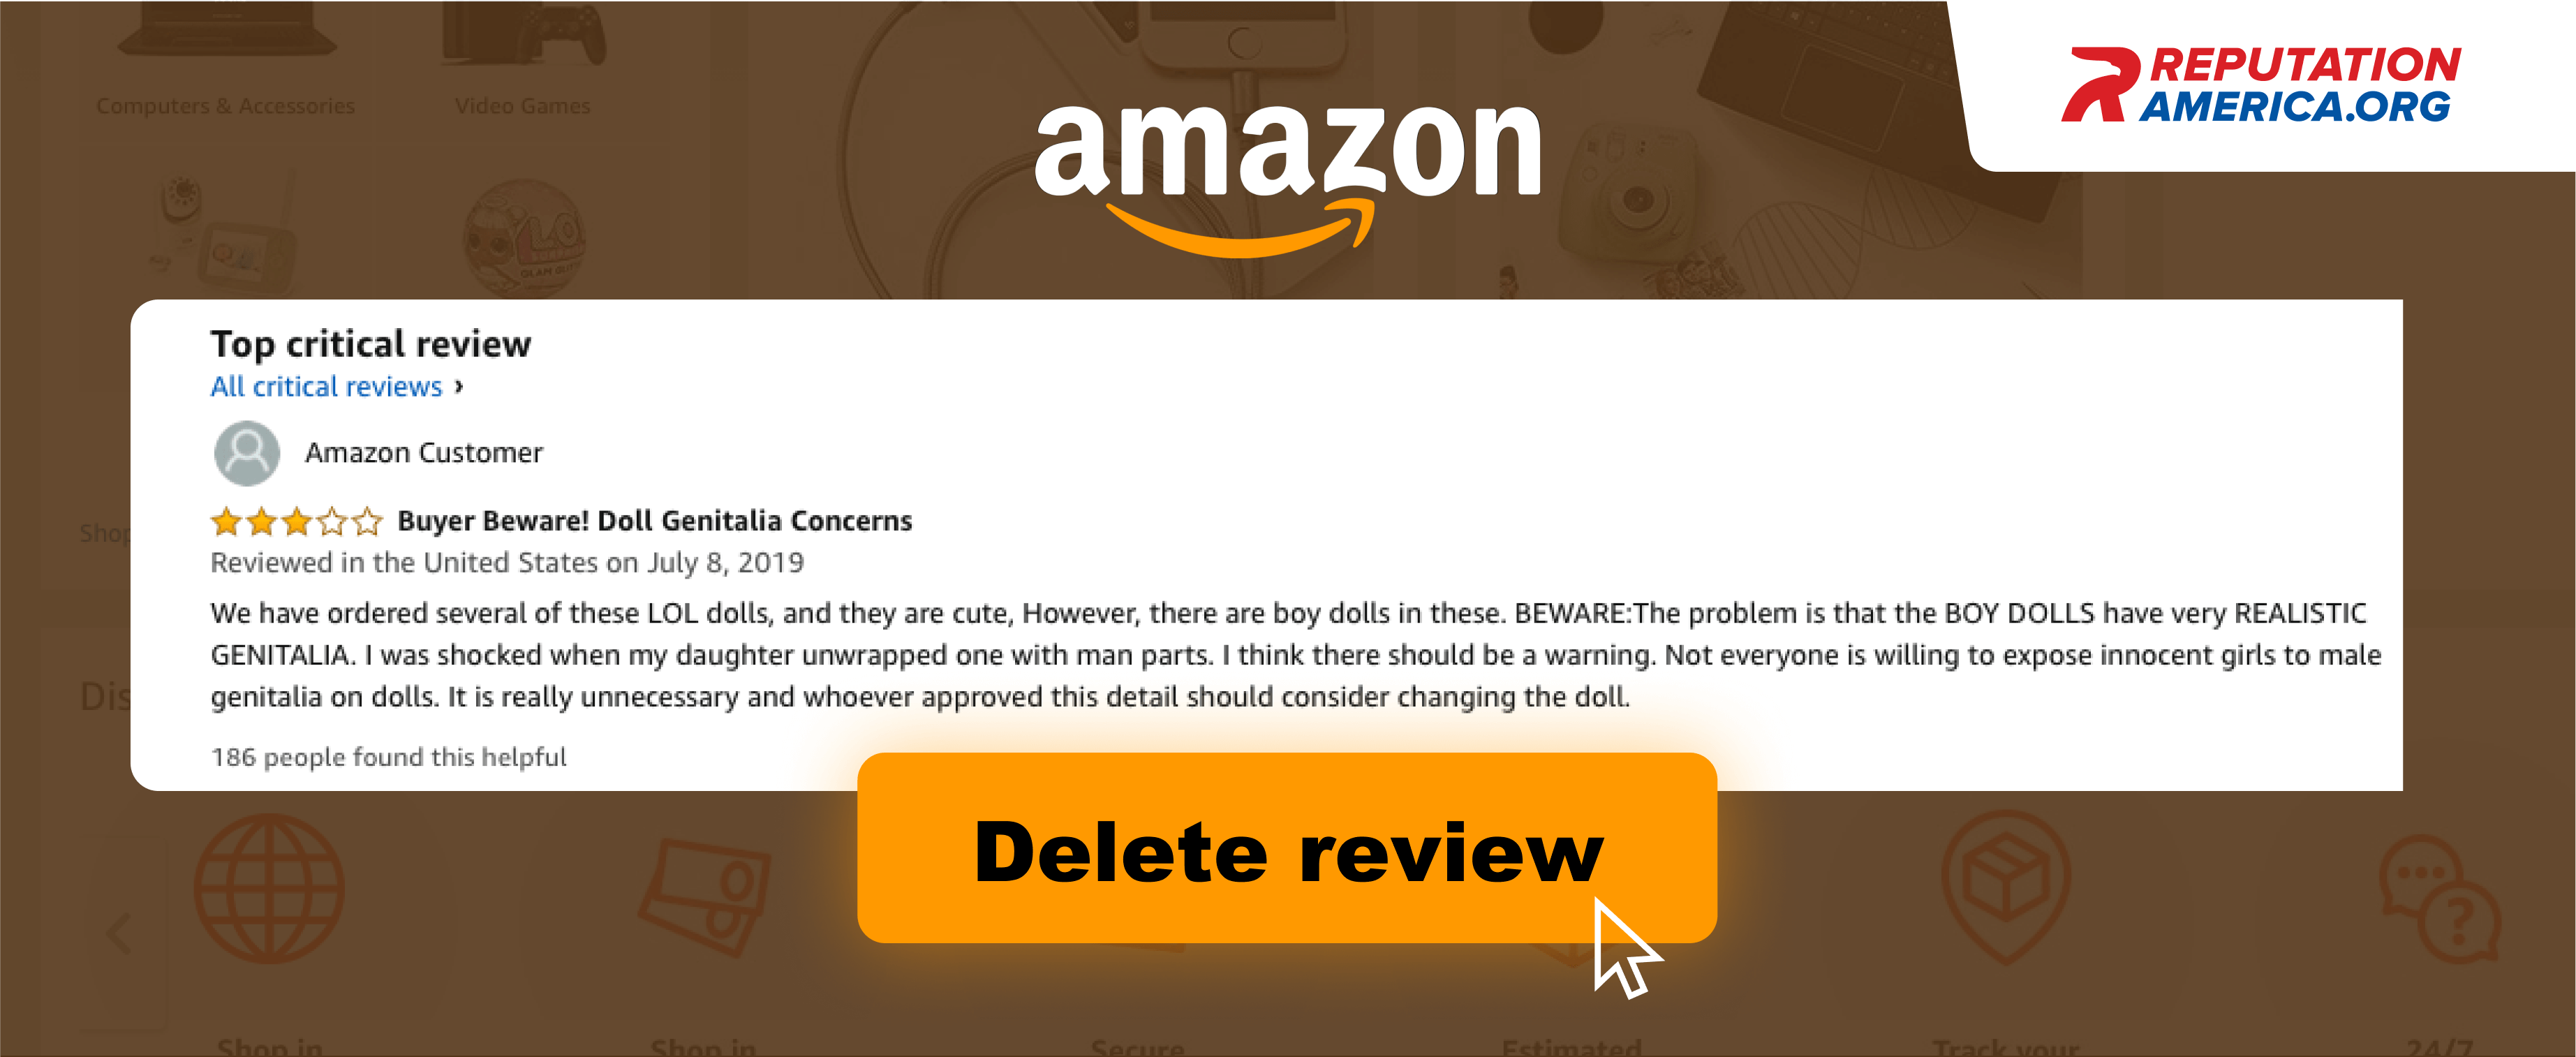 Remove Bad Reviews on Amazon